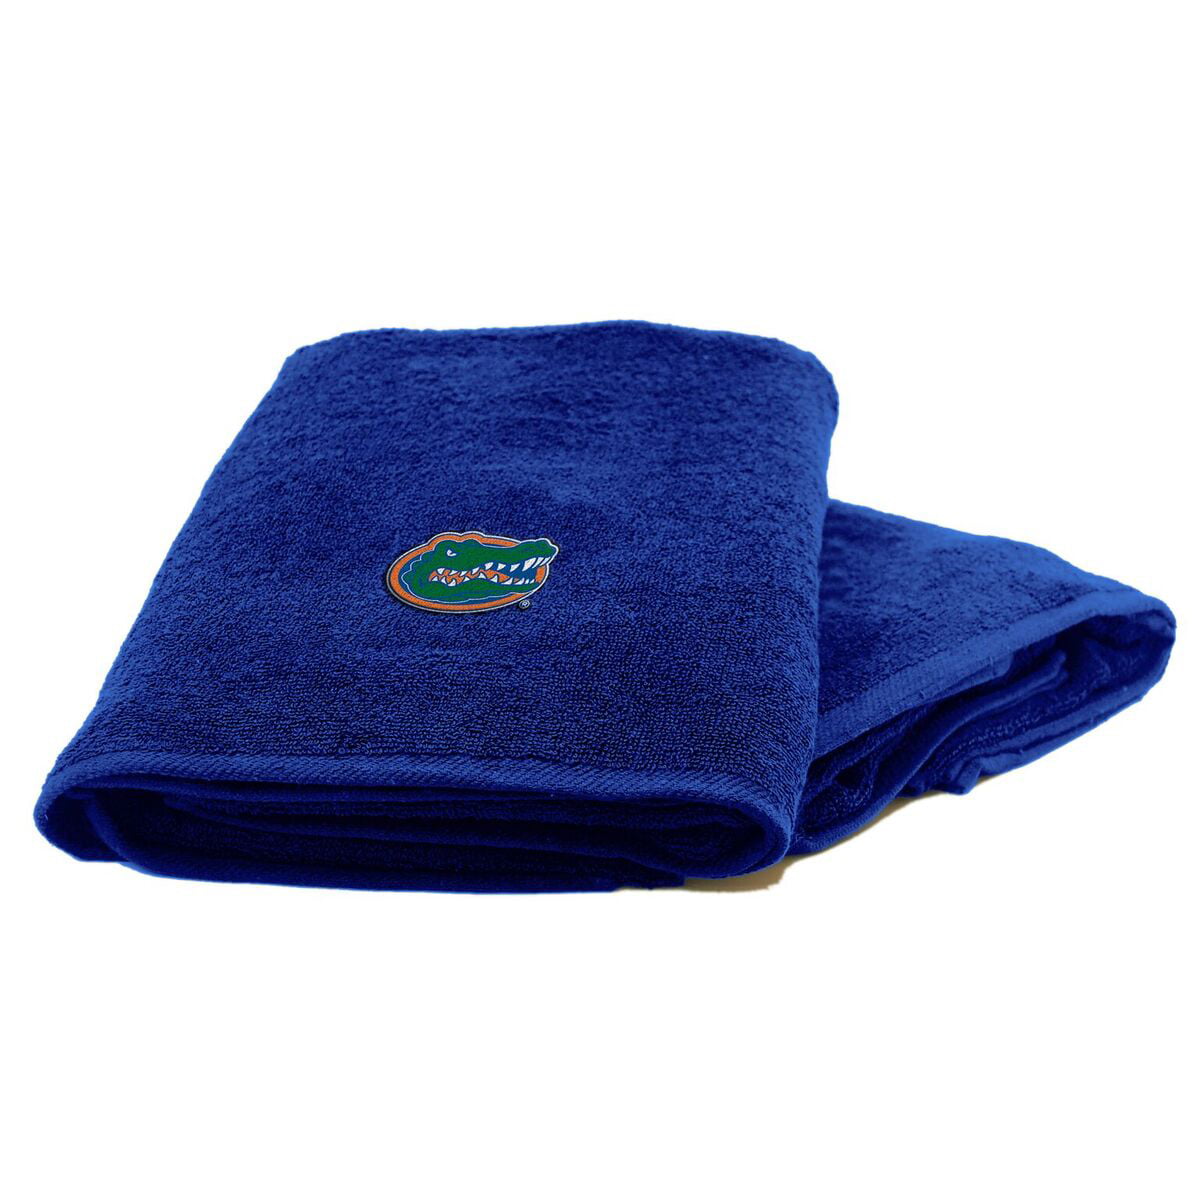 NCAA Finger Towel